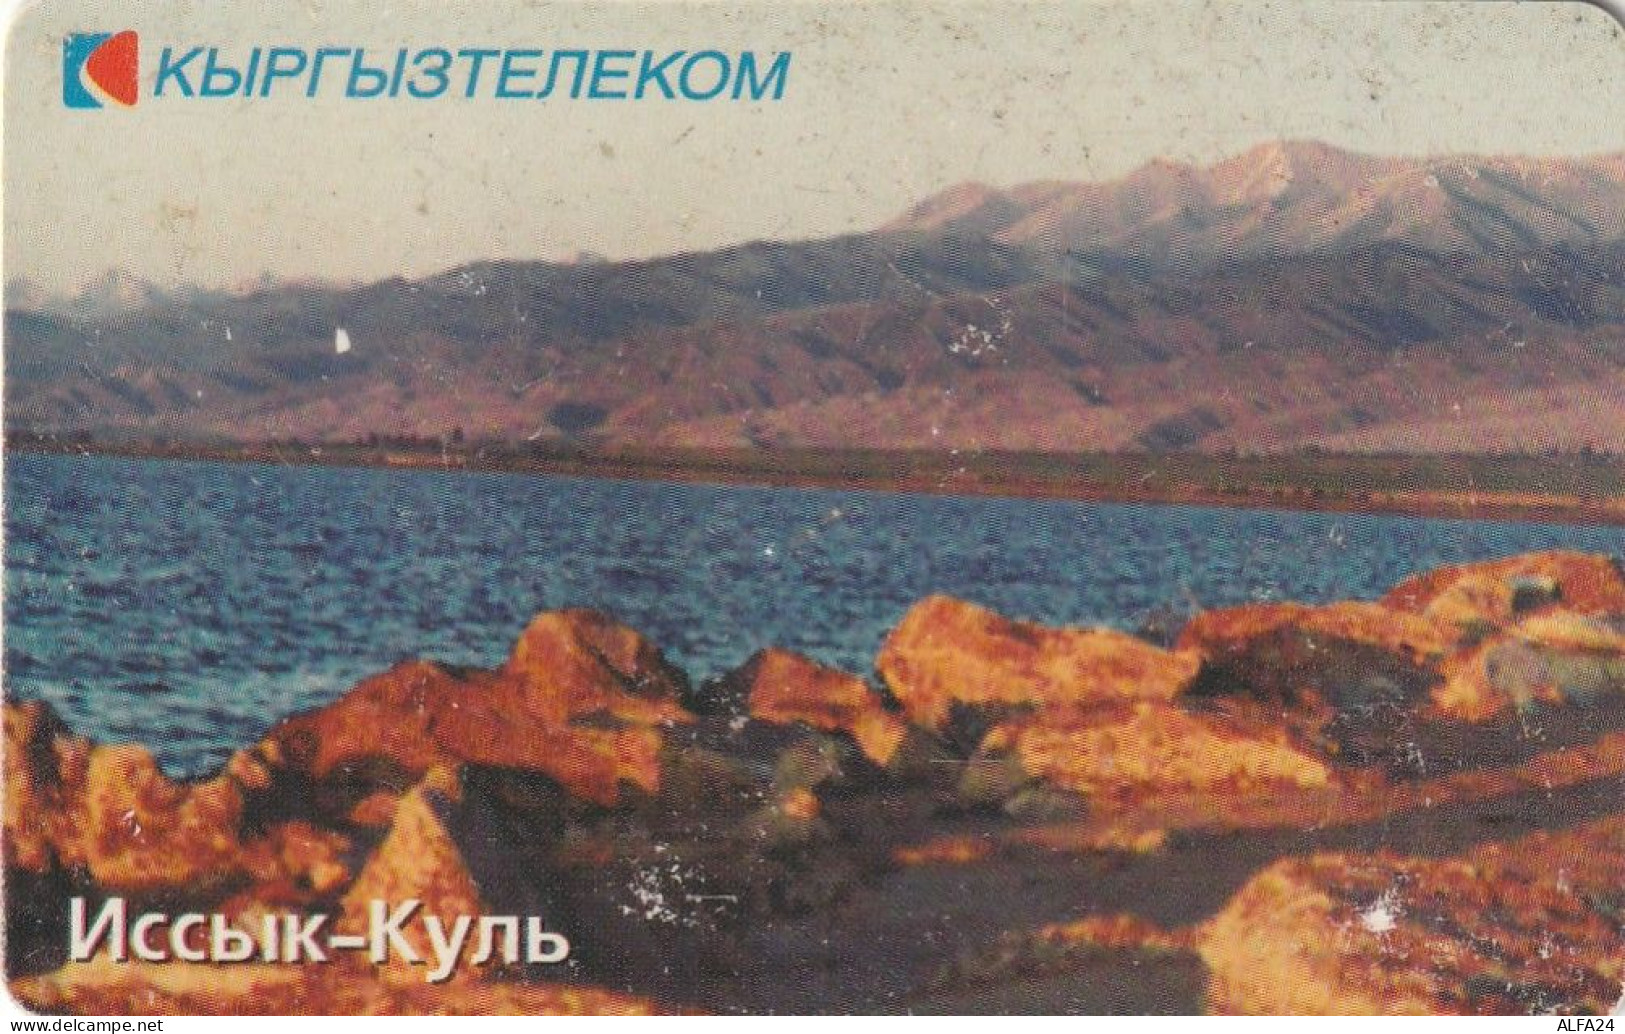 PHONE CARD KIRGYKISTAN  (E10.11.8 - Kyrgyzstan